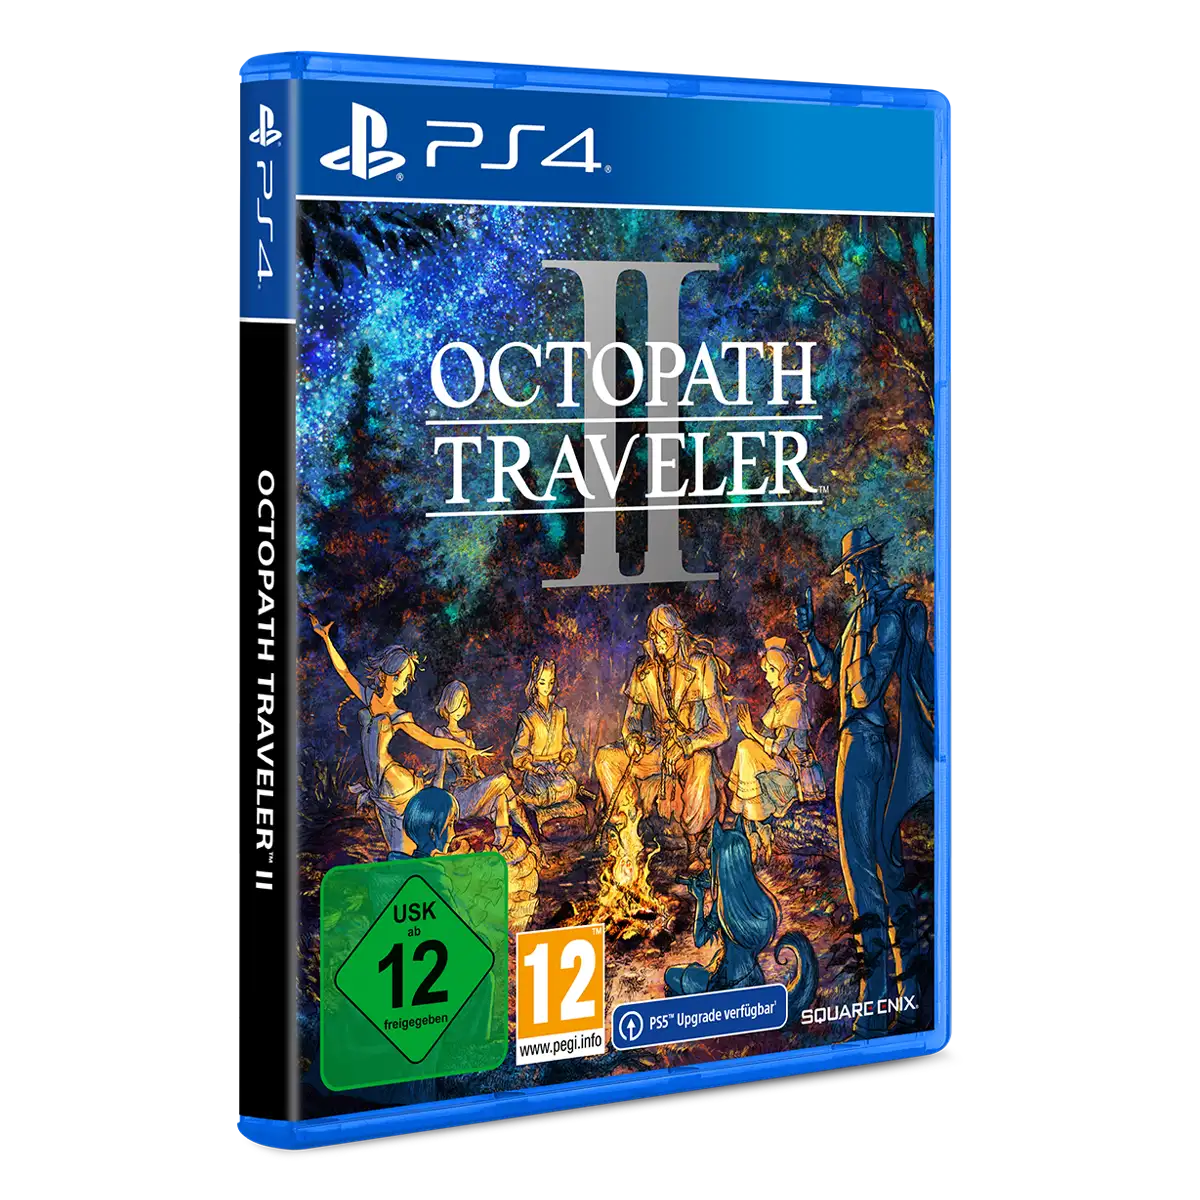 Octopath Traveler 2 (PS4) Image 2